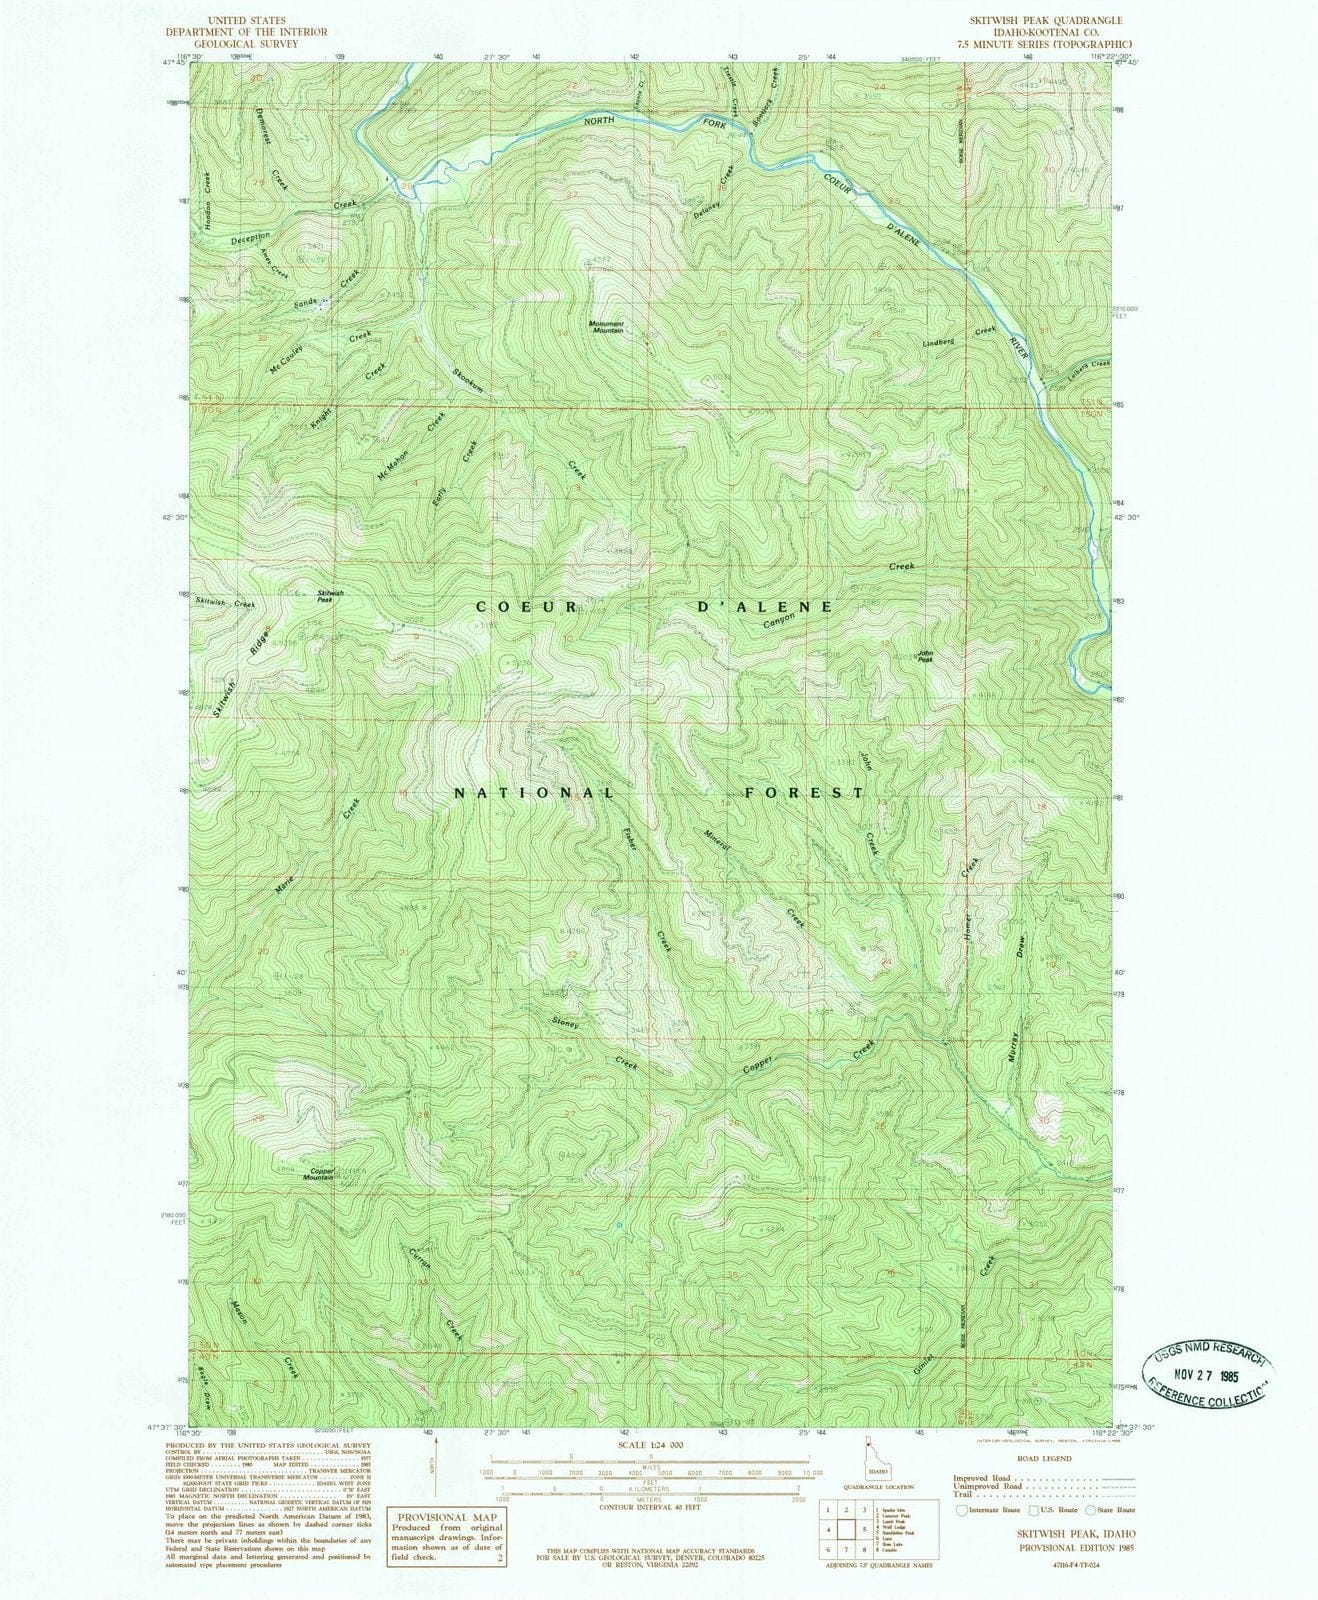 1985 Skitwish Peak, ID - Idaho - USGS Topographic Map